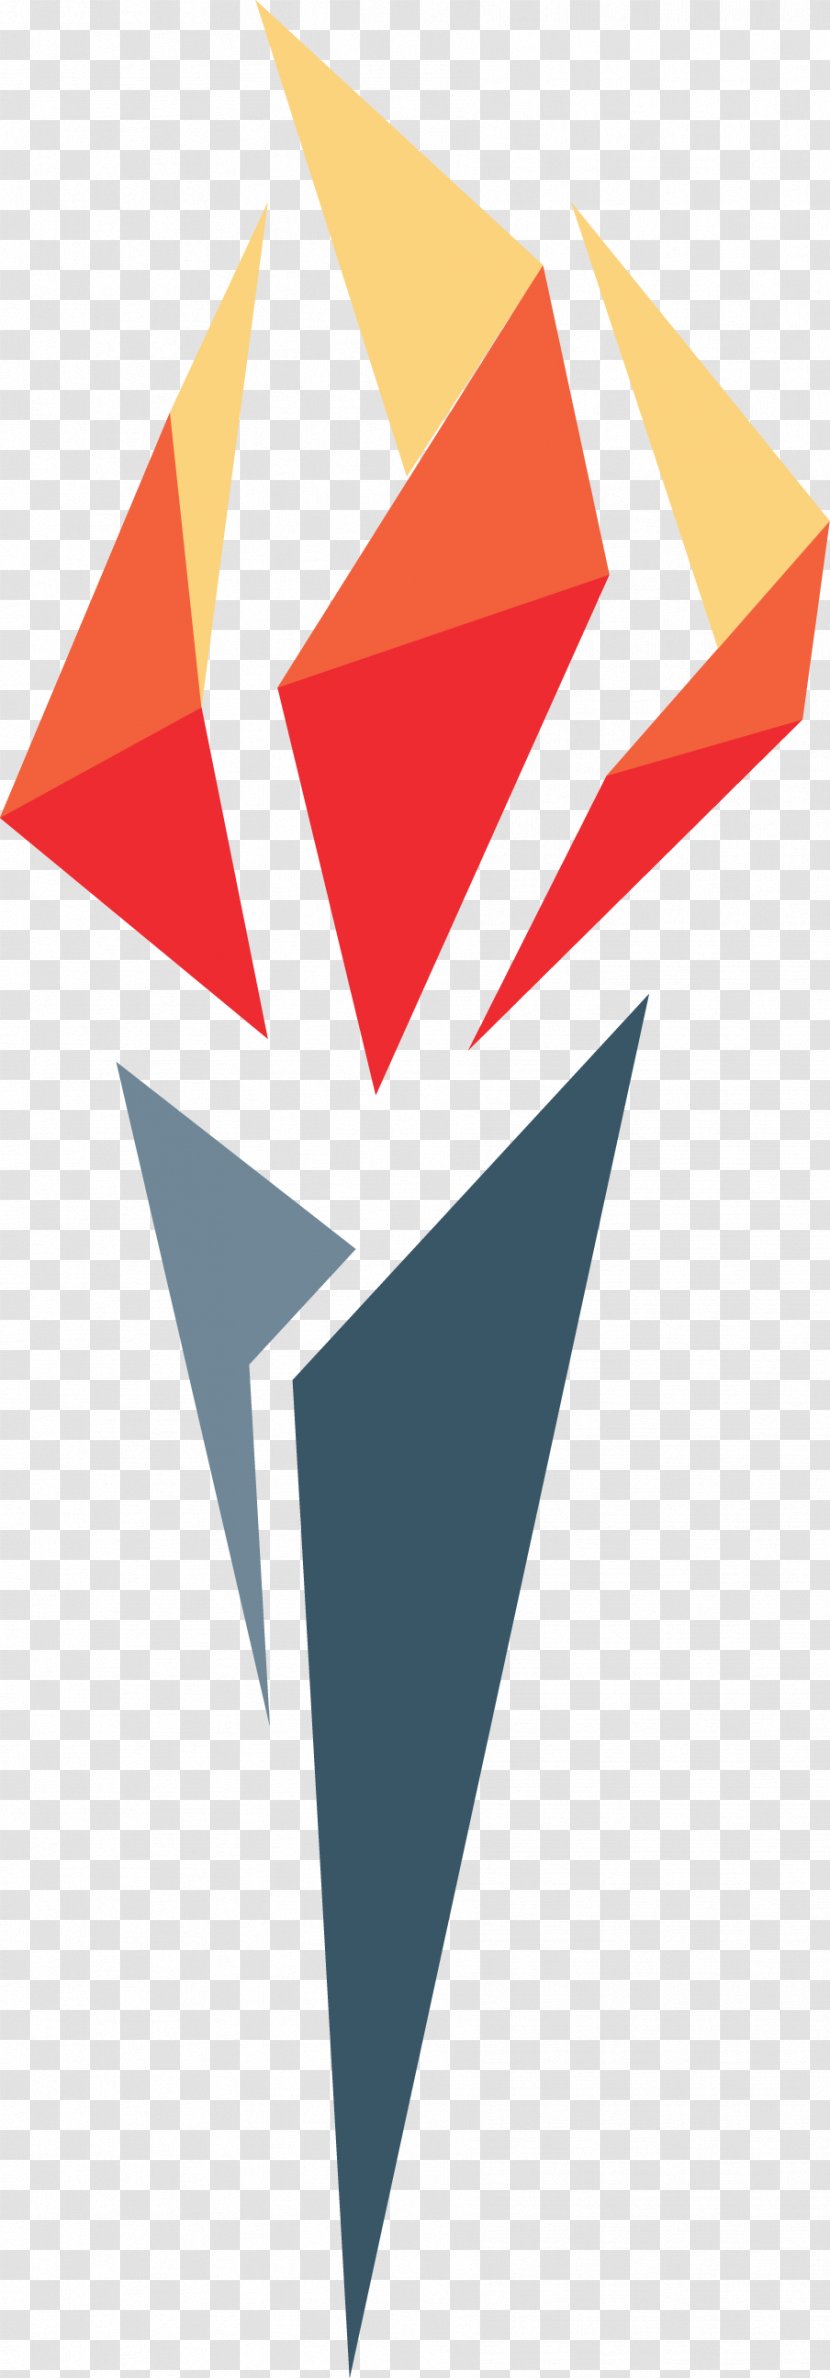 Graphic Design Logo Competition - Technology - Contest Transparent PNG